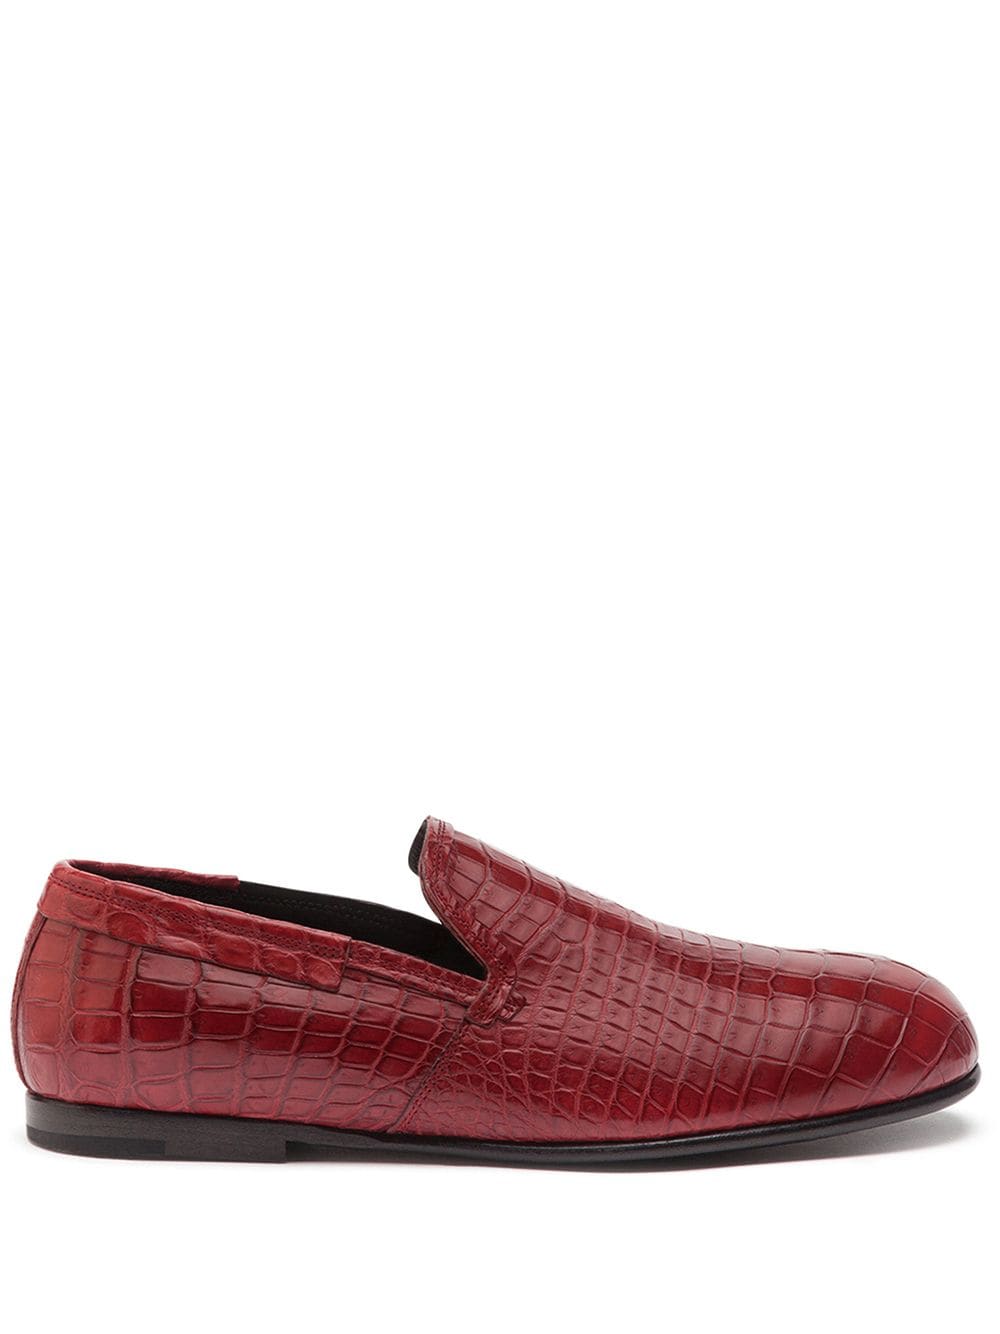 Dolce & Gabbana Crocodile Leather Loafers In Burgundy